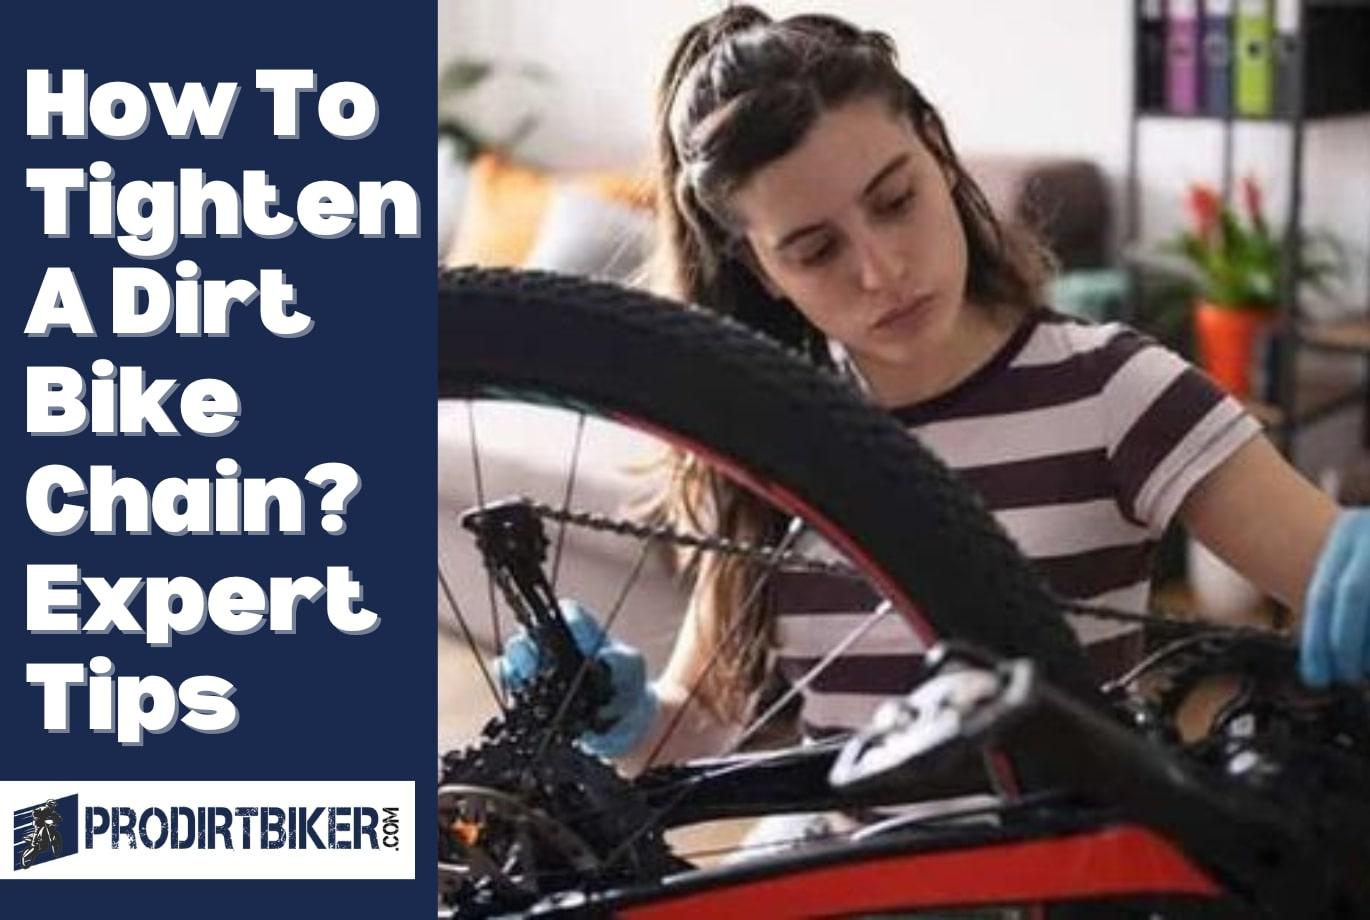 How To Tighten A Dirt Bike Chain? Expert Tips